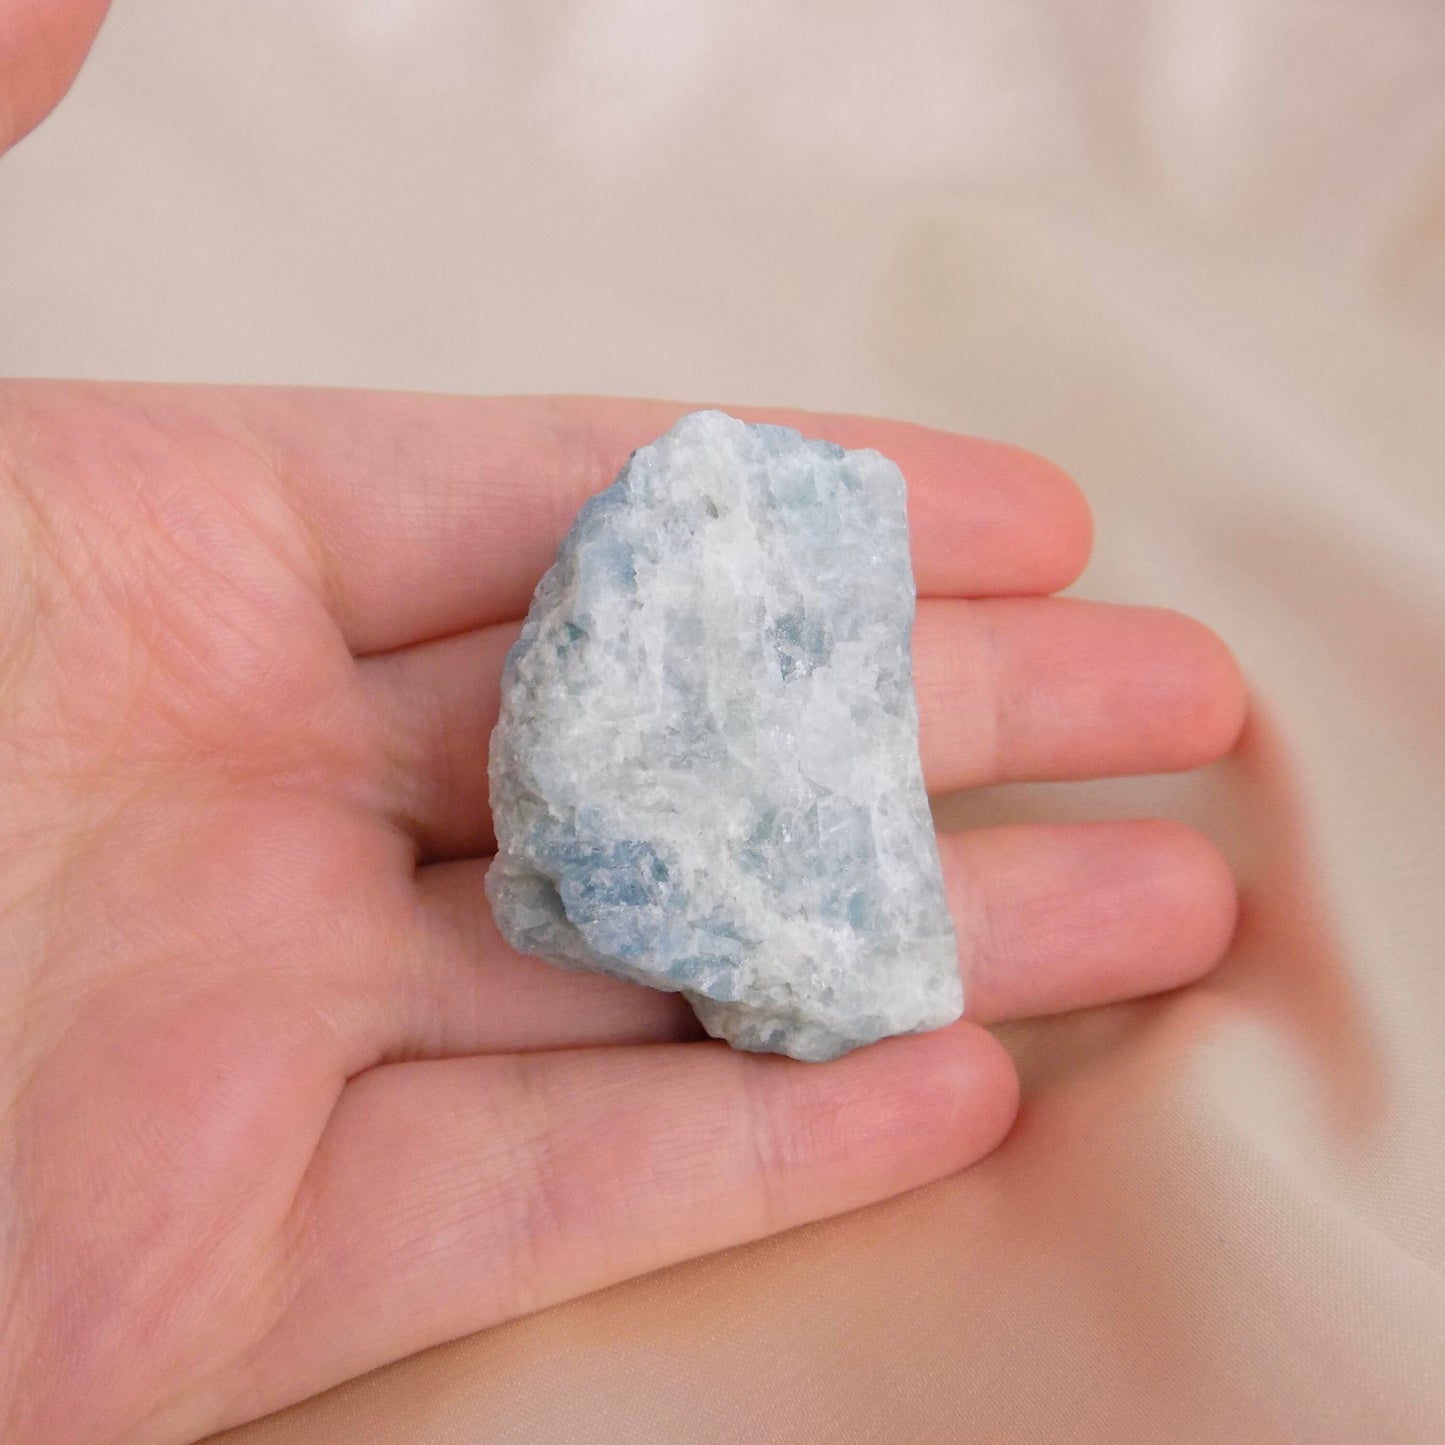 Raw Aquamarine Crystal For Home Decor Or Calming Healing Gemstone, M6-715